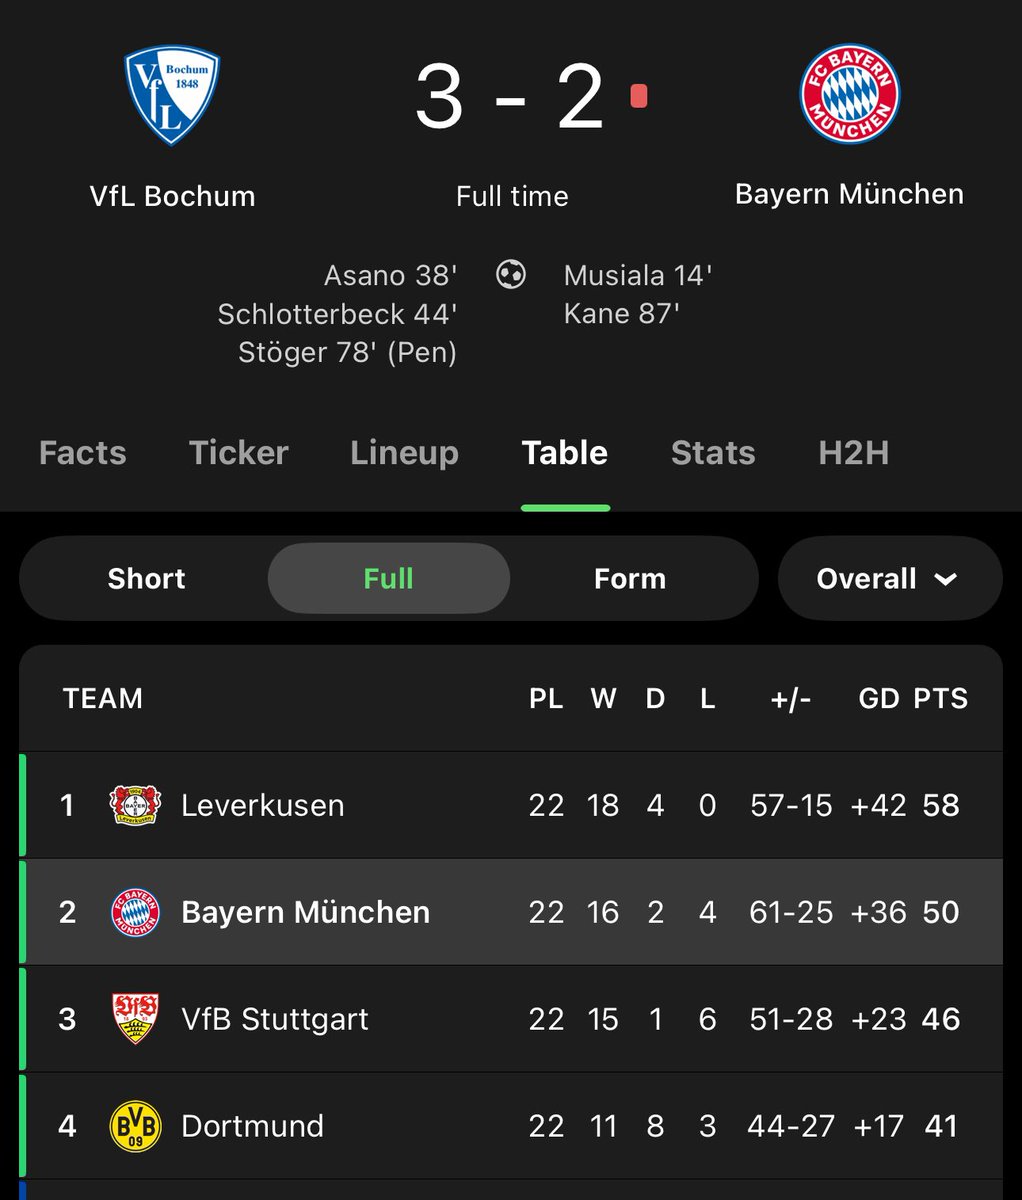 Wow Leverkusen has to win the Bundesliga now